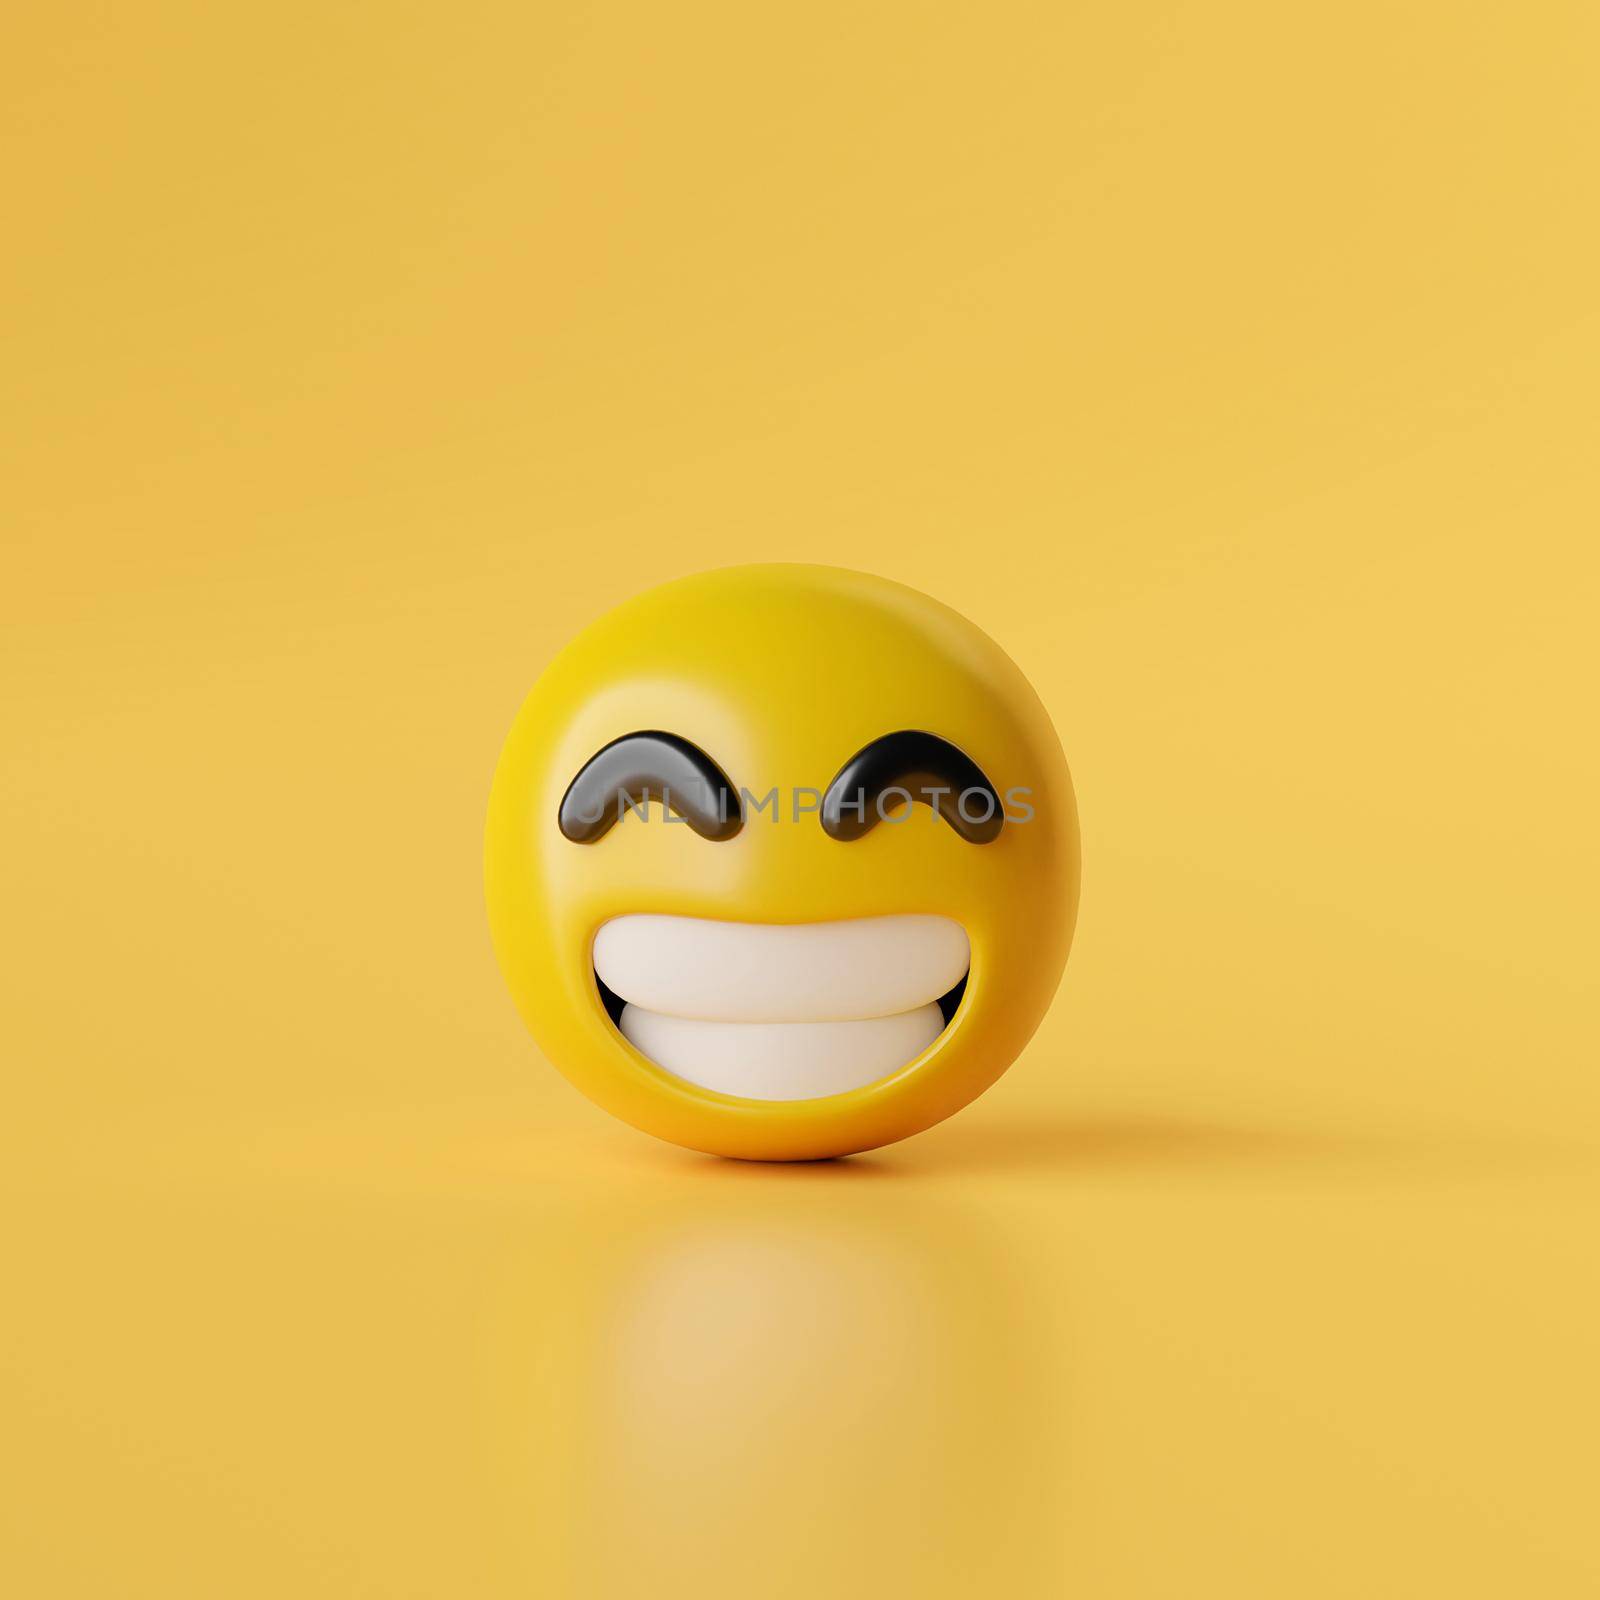 Smile emoji icons on yellow background, 3d illustration by nutzchotwarut